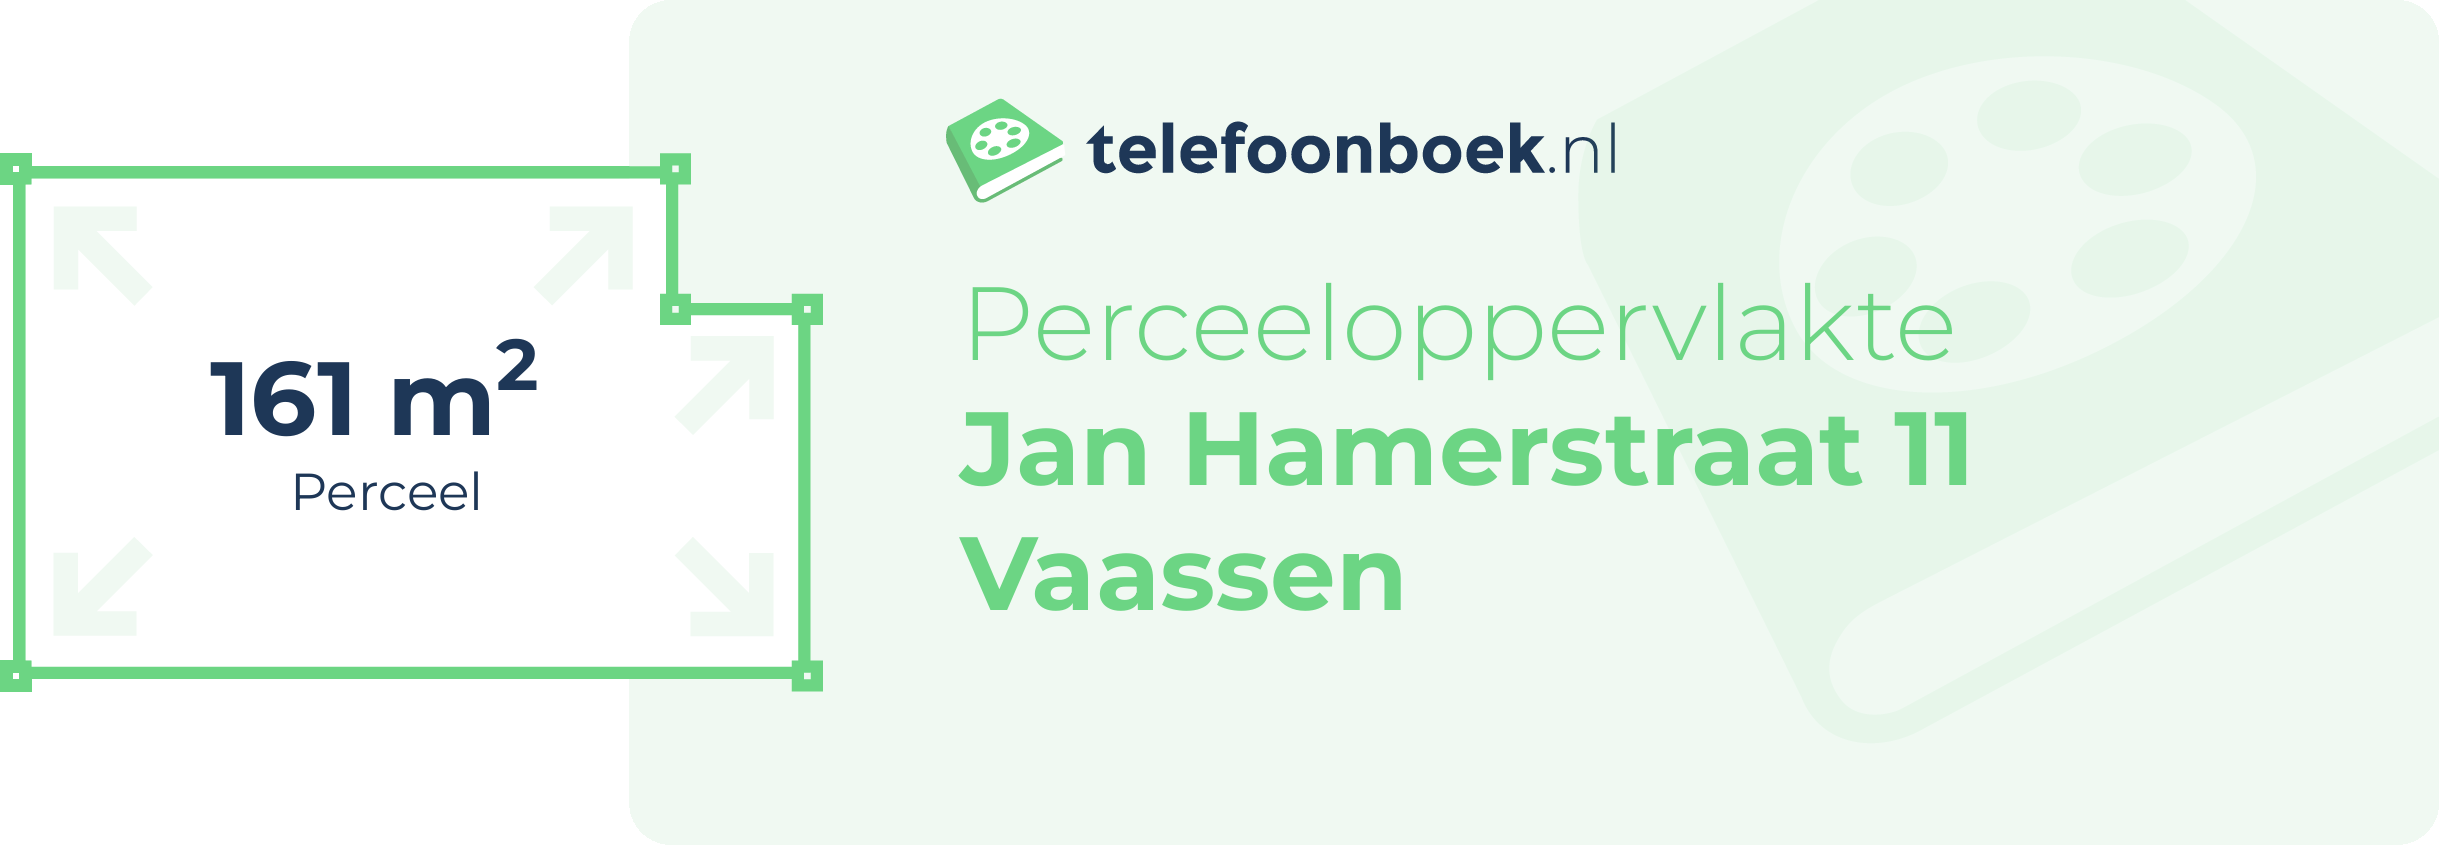 Perceeloppervlakte Jan Hamerstraat 11 Vaassen